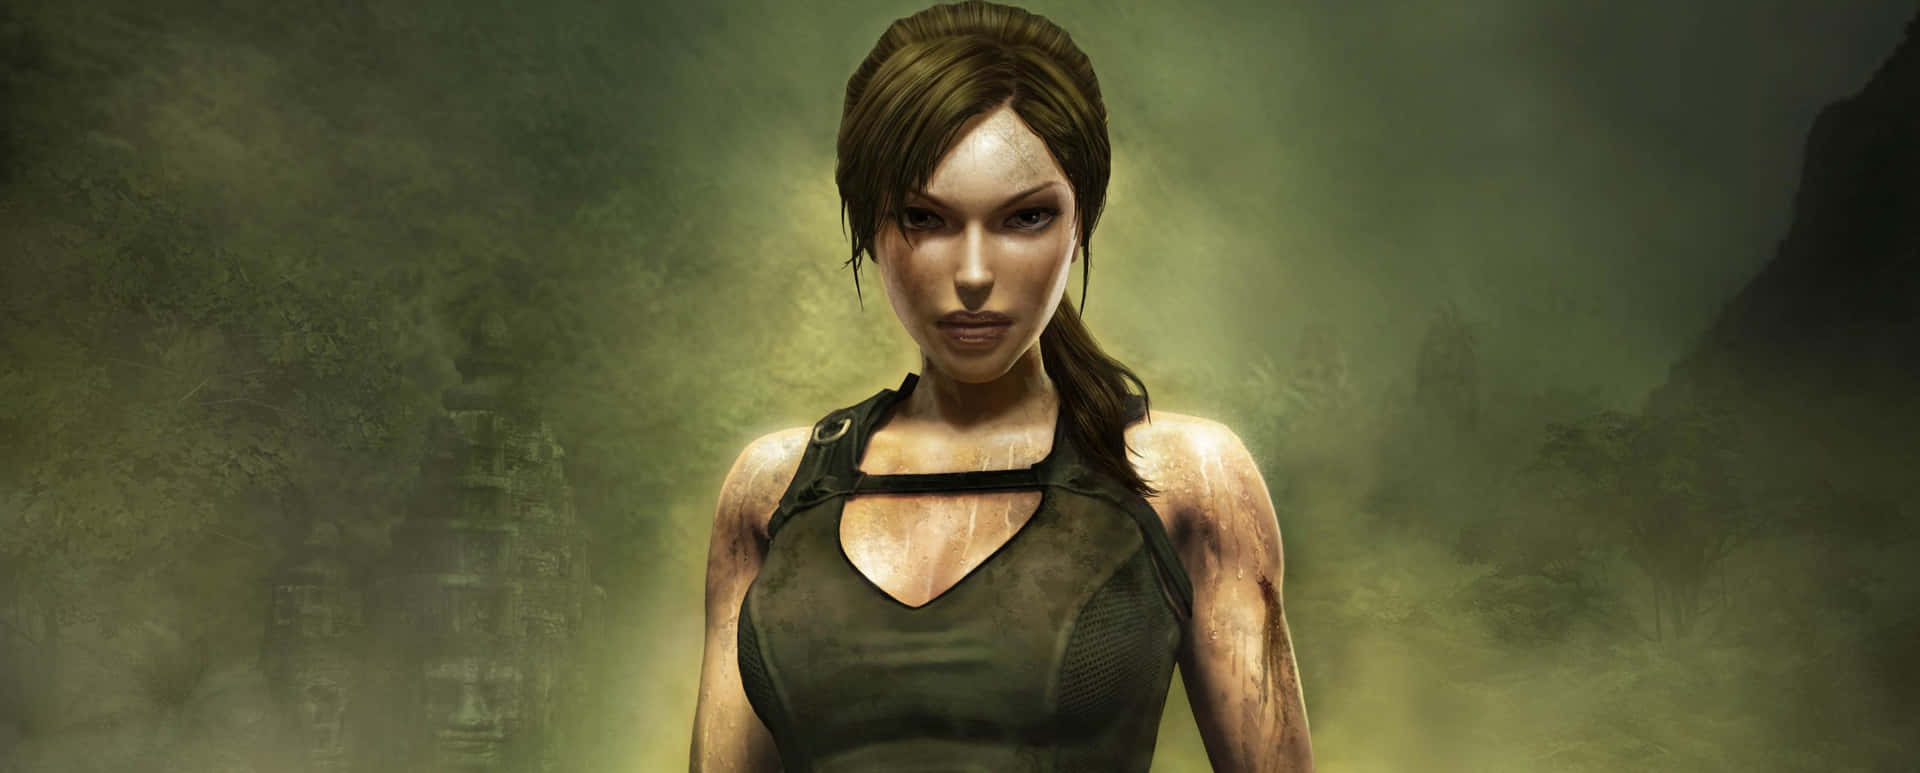 Smoky Green Lara 3440x1440p Rise Of The Tomb Raider Background